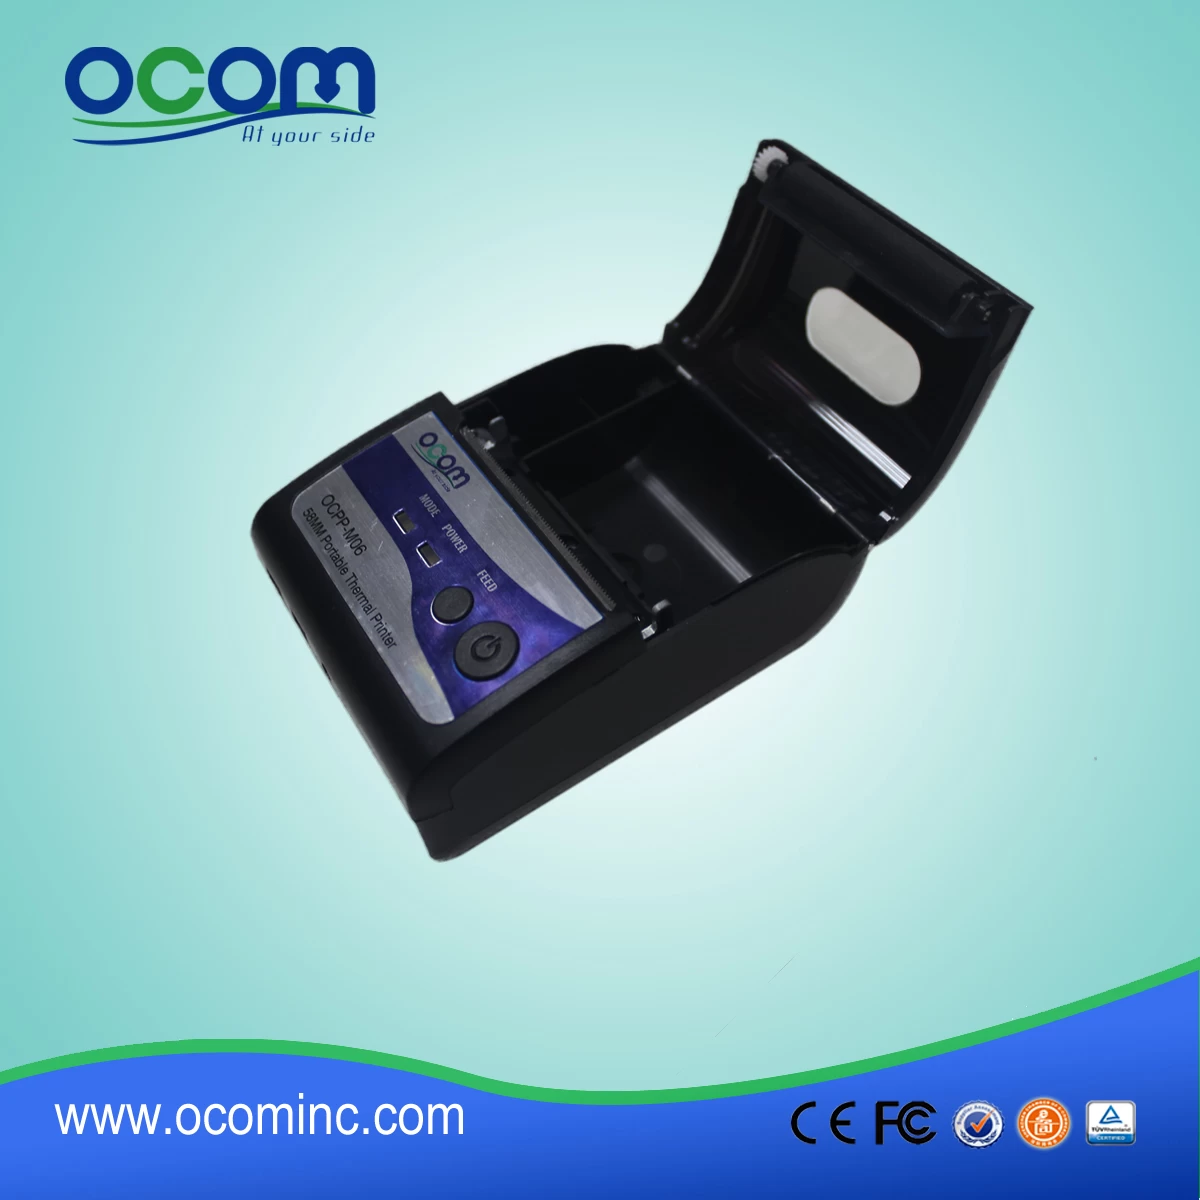 (OCPP-M06) OCOM Hot selling cheap android pos printer, pos printer android